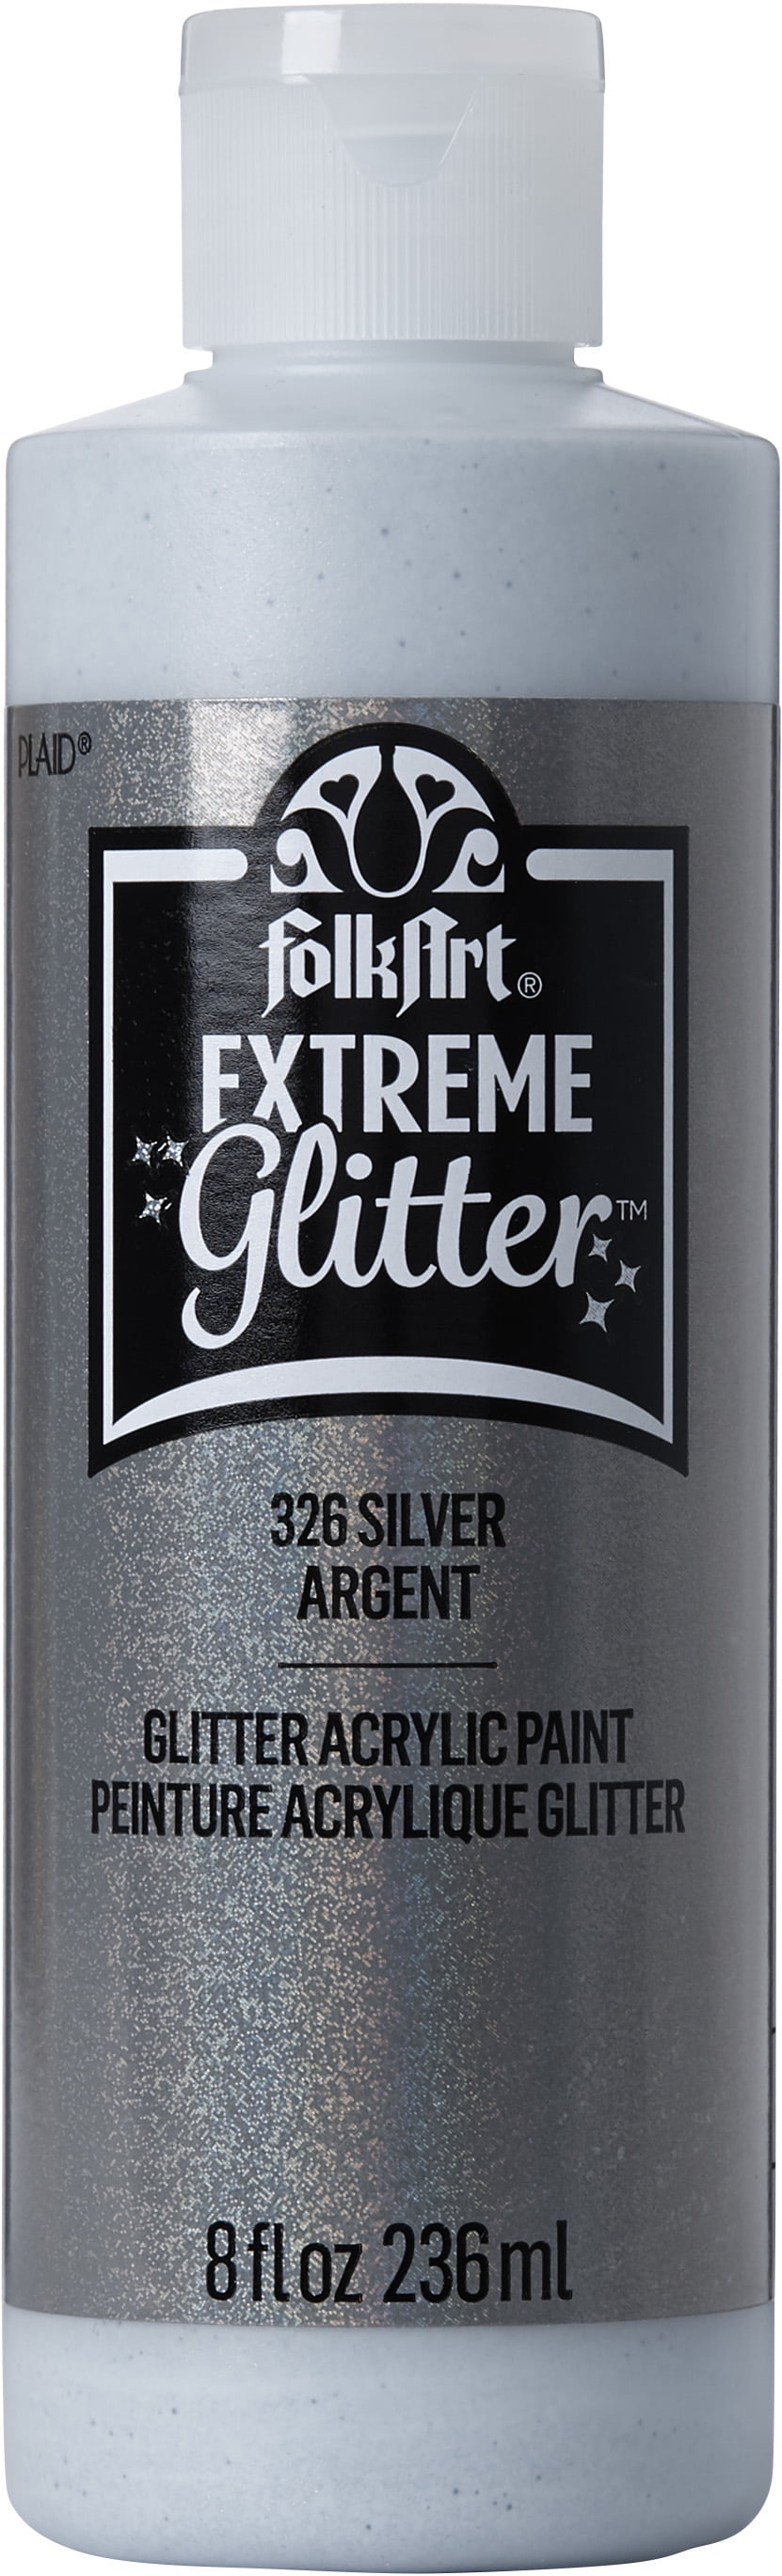 FolkArt Extreme Glitter Acrylic Craft Paint, Silver, 8 fl oz